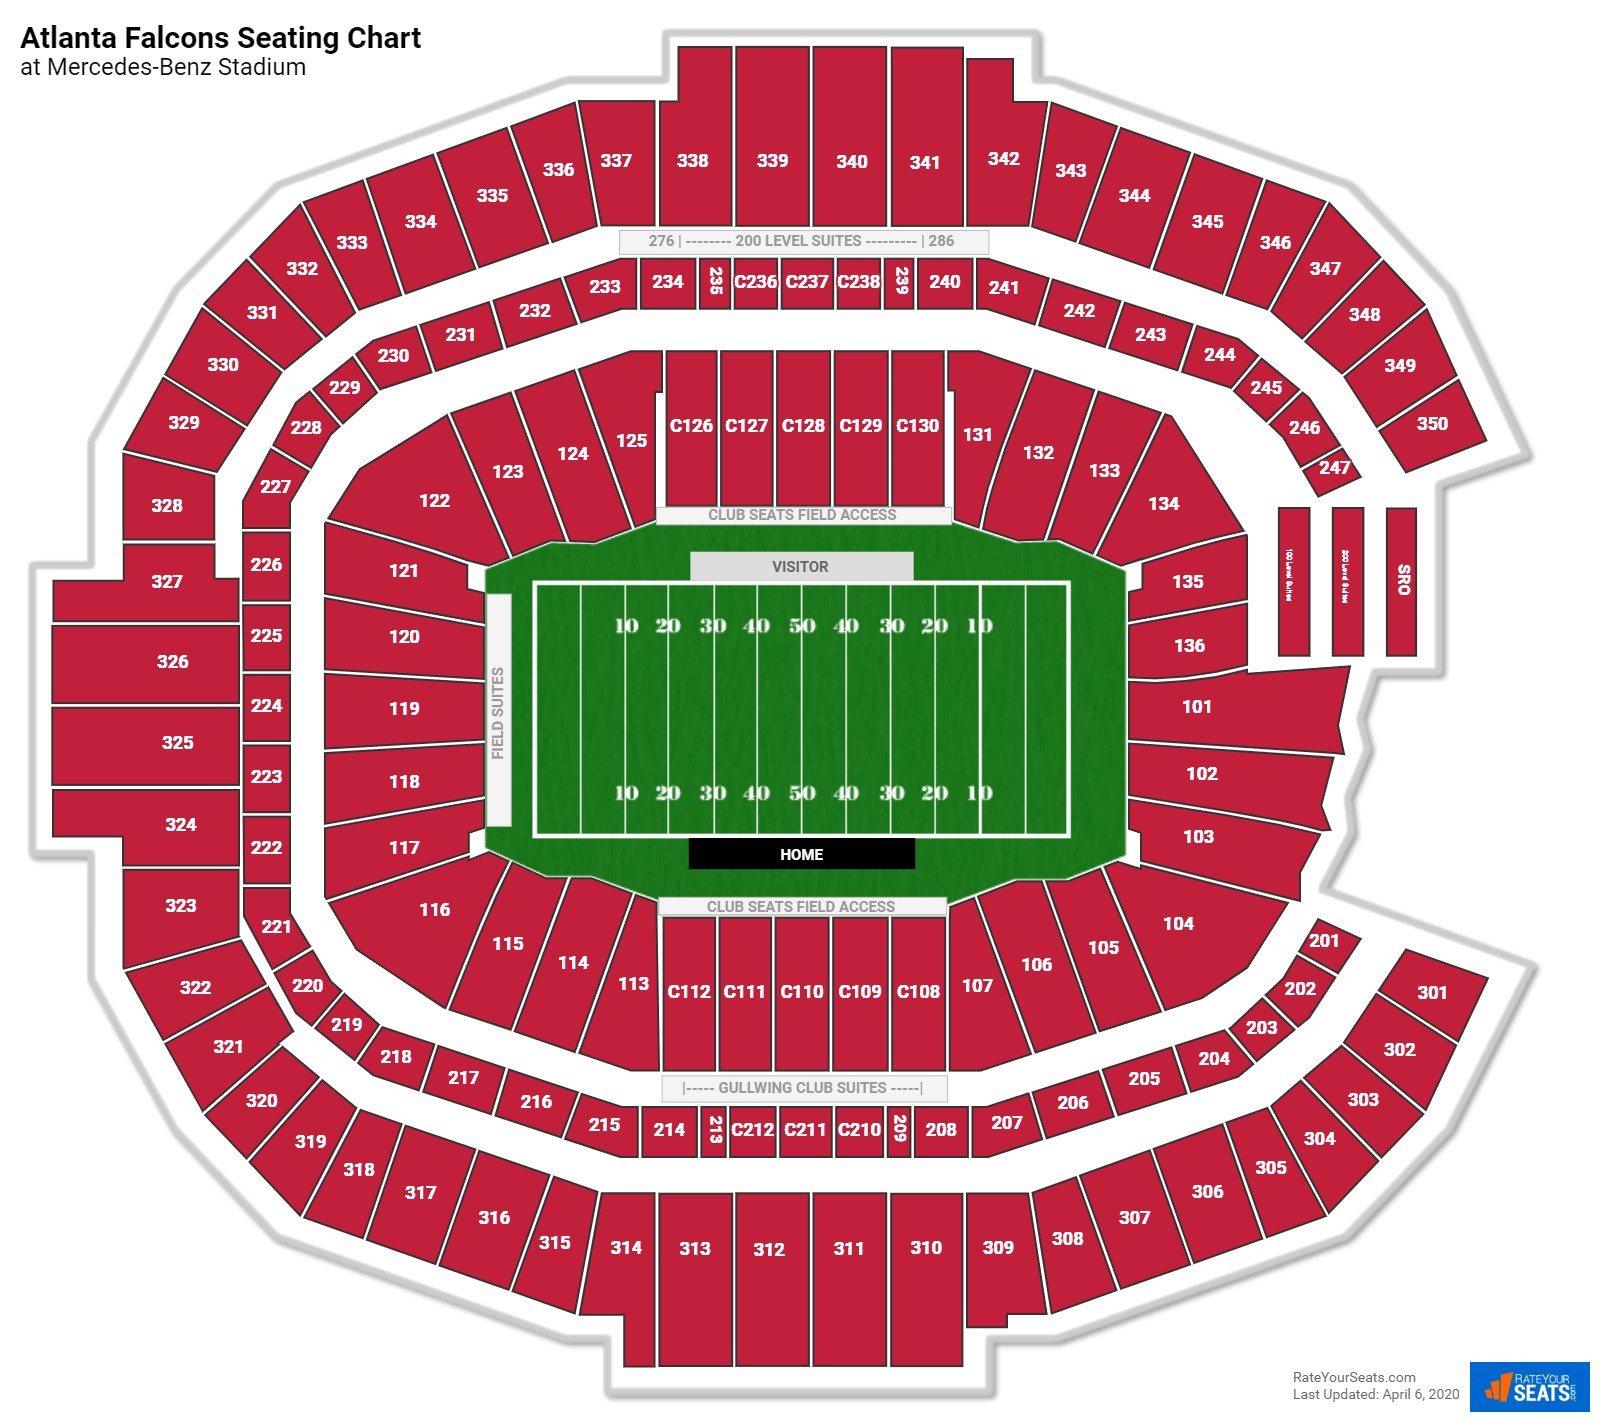 Atlanta Falcons Seating Charts At Mercedes Benz Stadium Rateyourseats Com